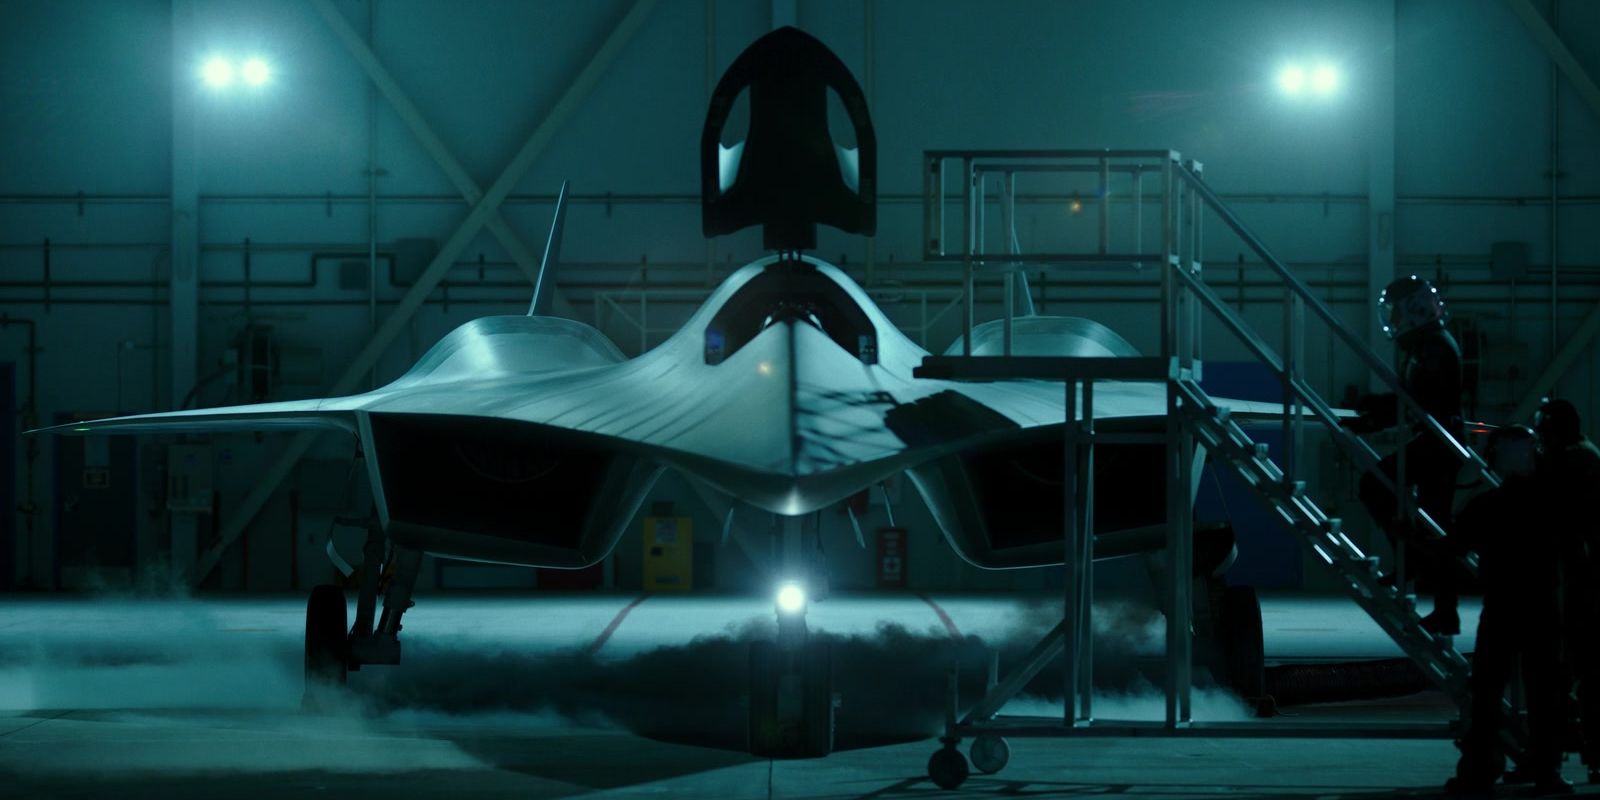 Tom Cruise getting into the Darkstar plane in Top Gun: Maverick